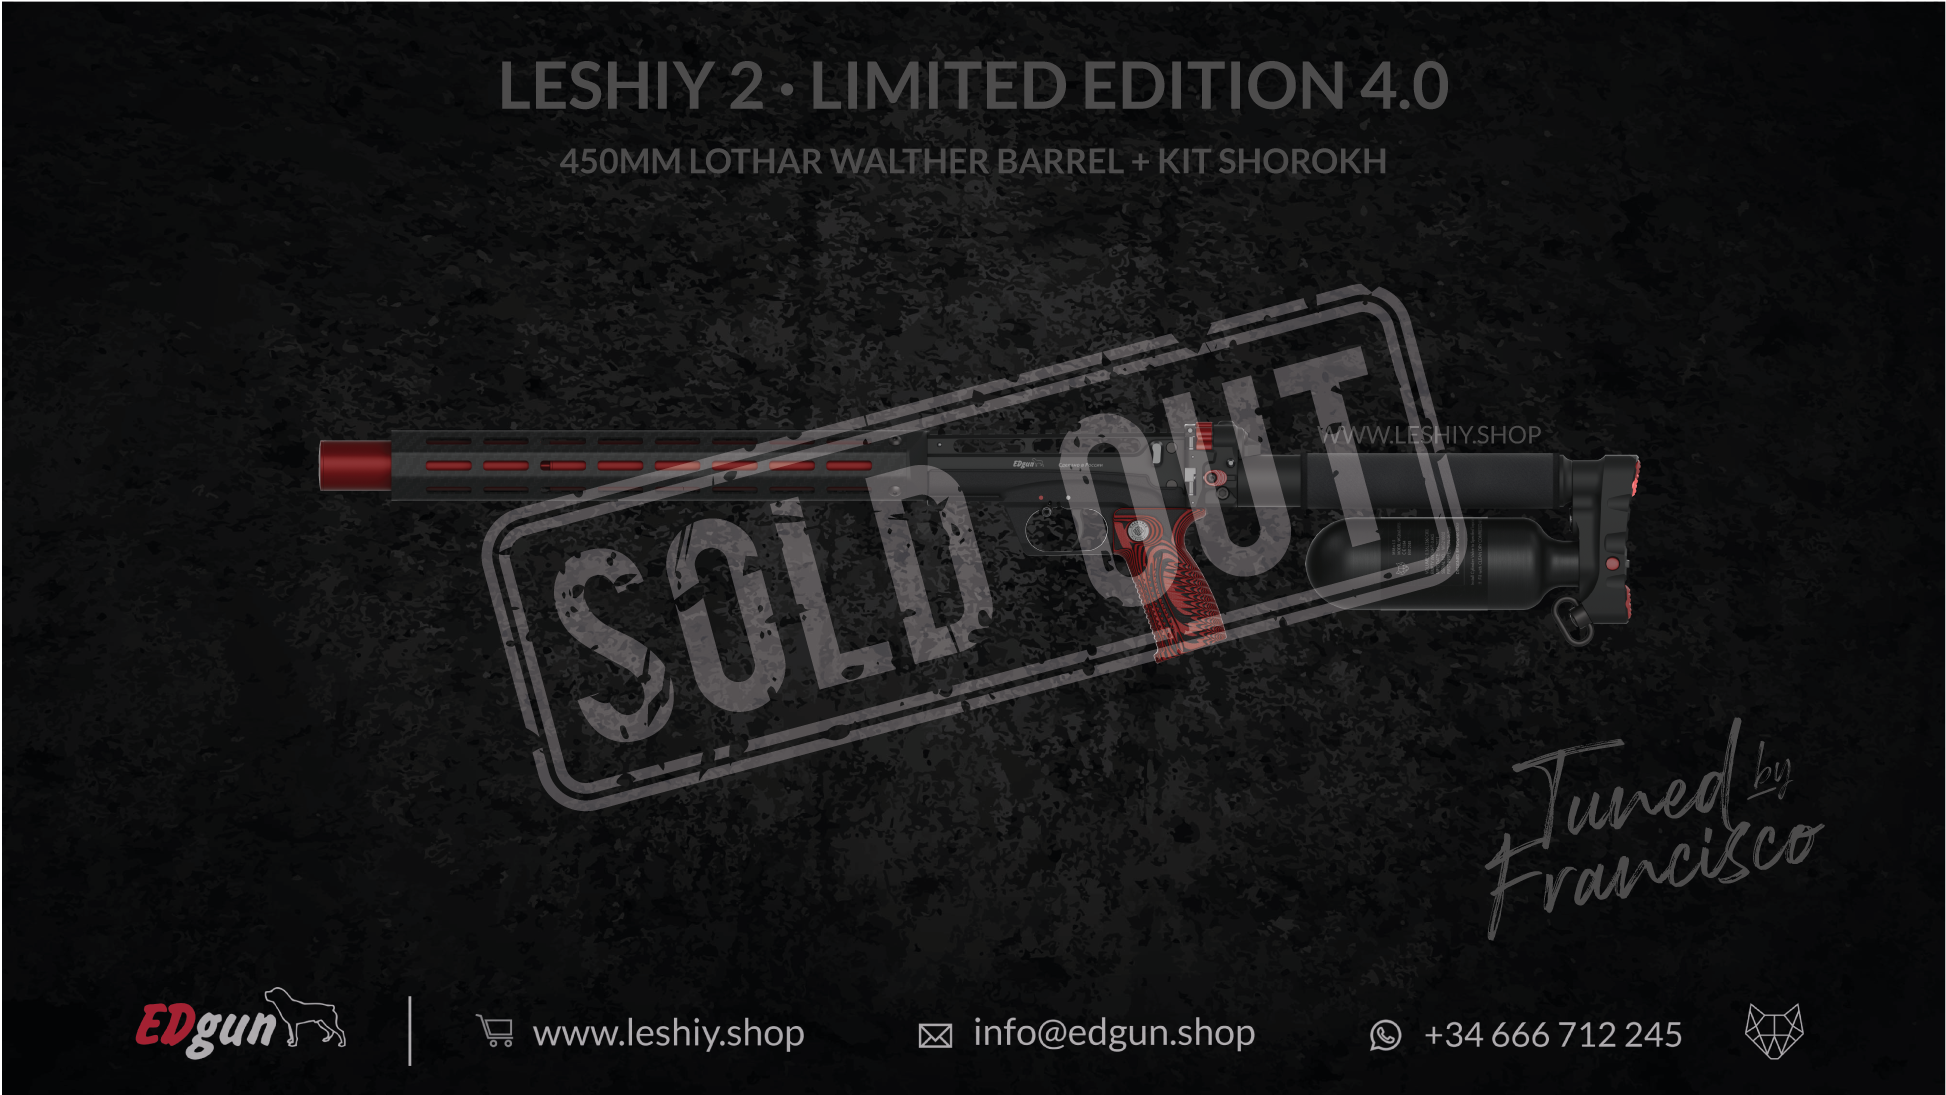 Leshiy Edición Limitada 4.0 - Tuned by Francisco